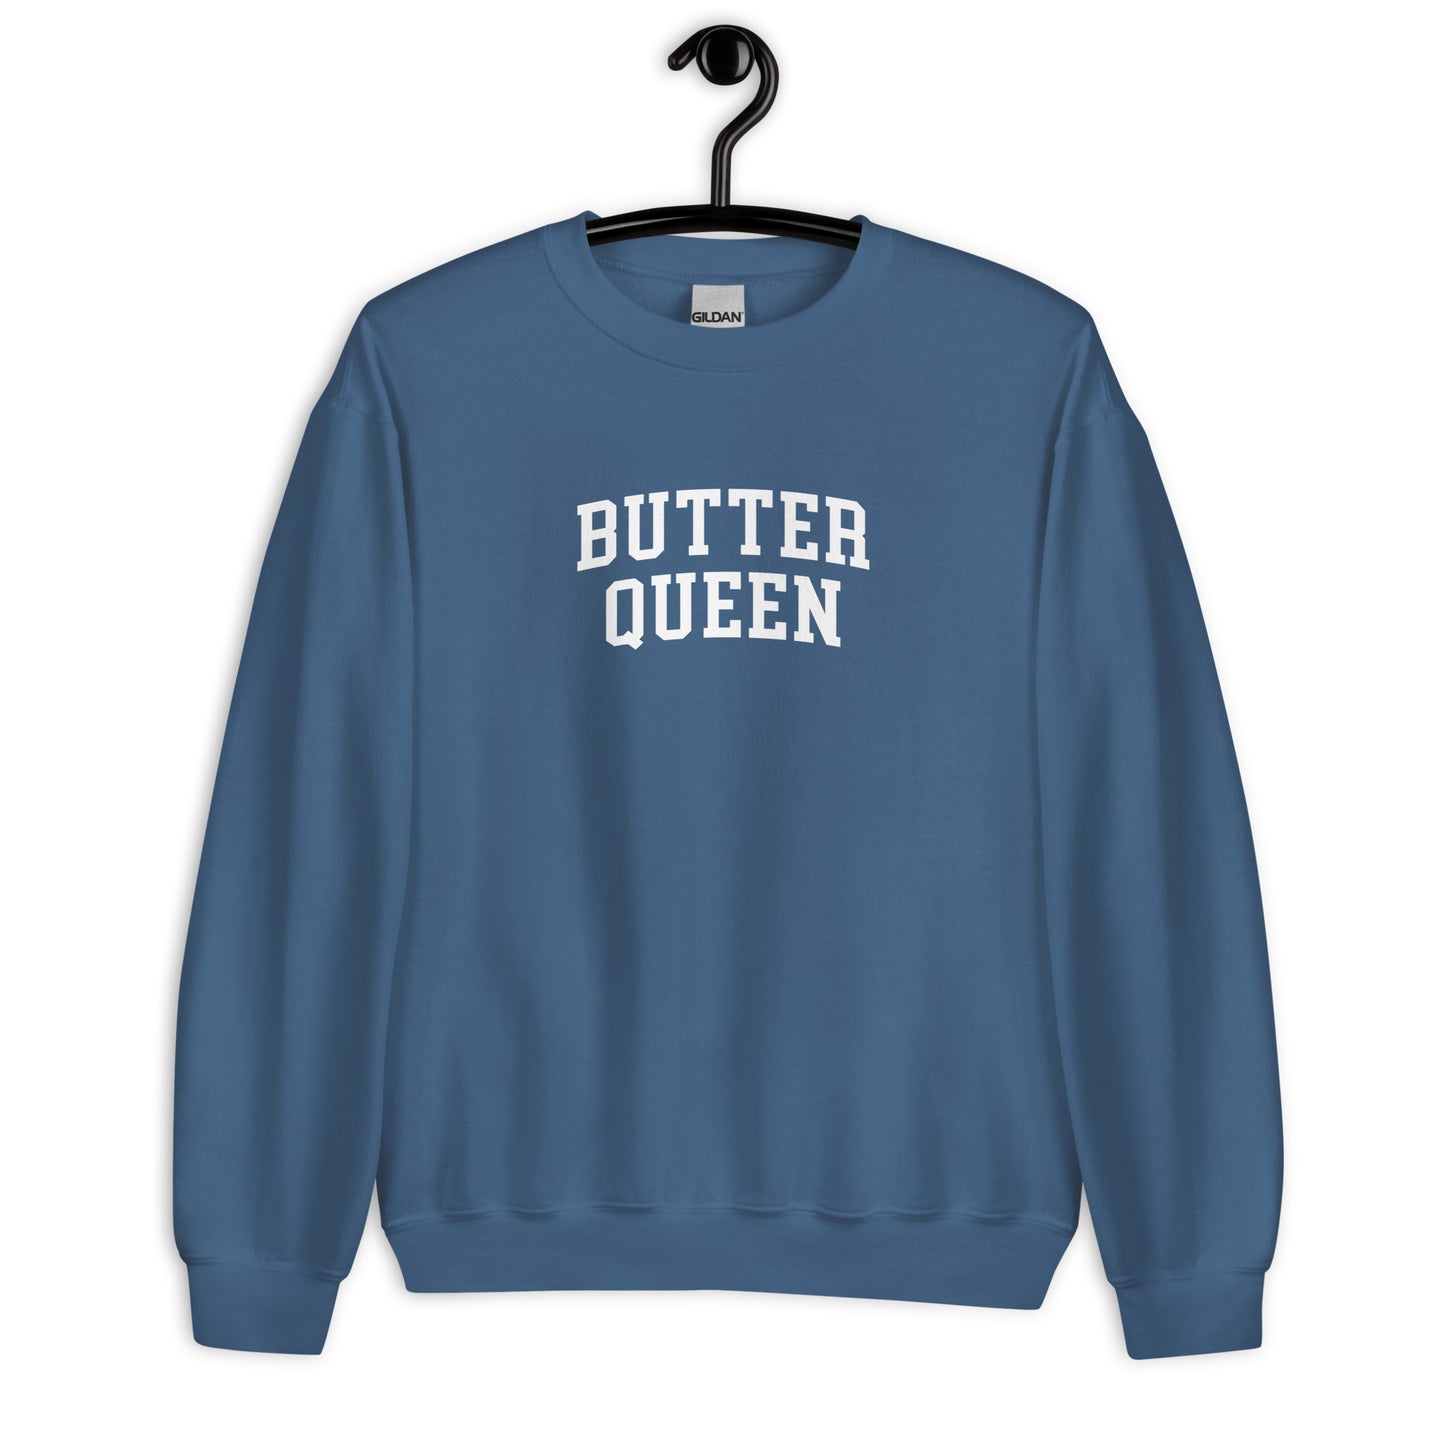 Butter Queen Sweatshirt - Arched Font